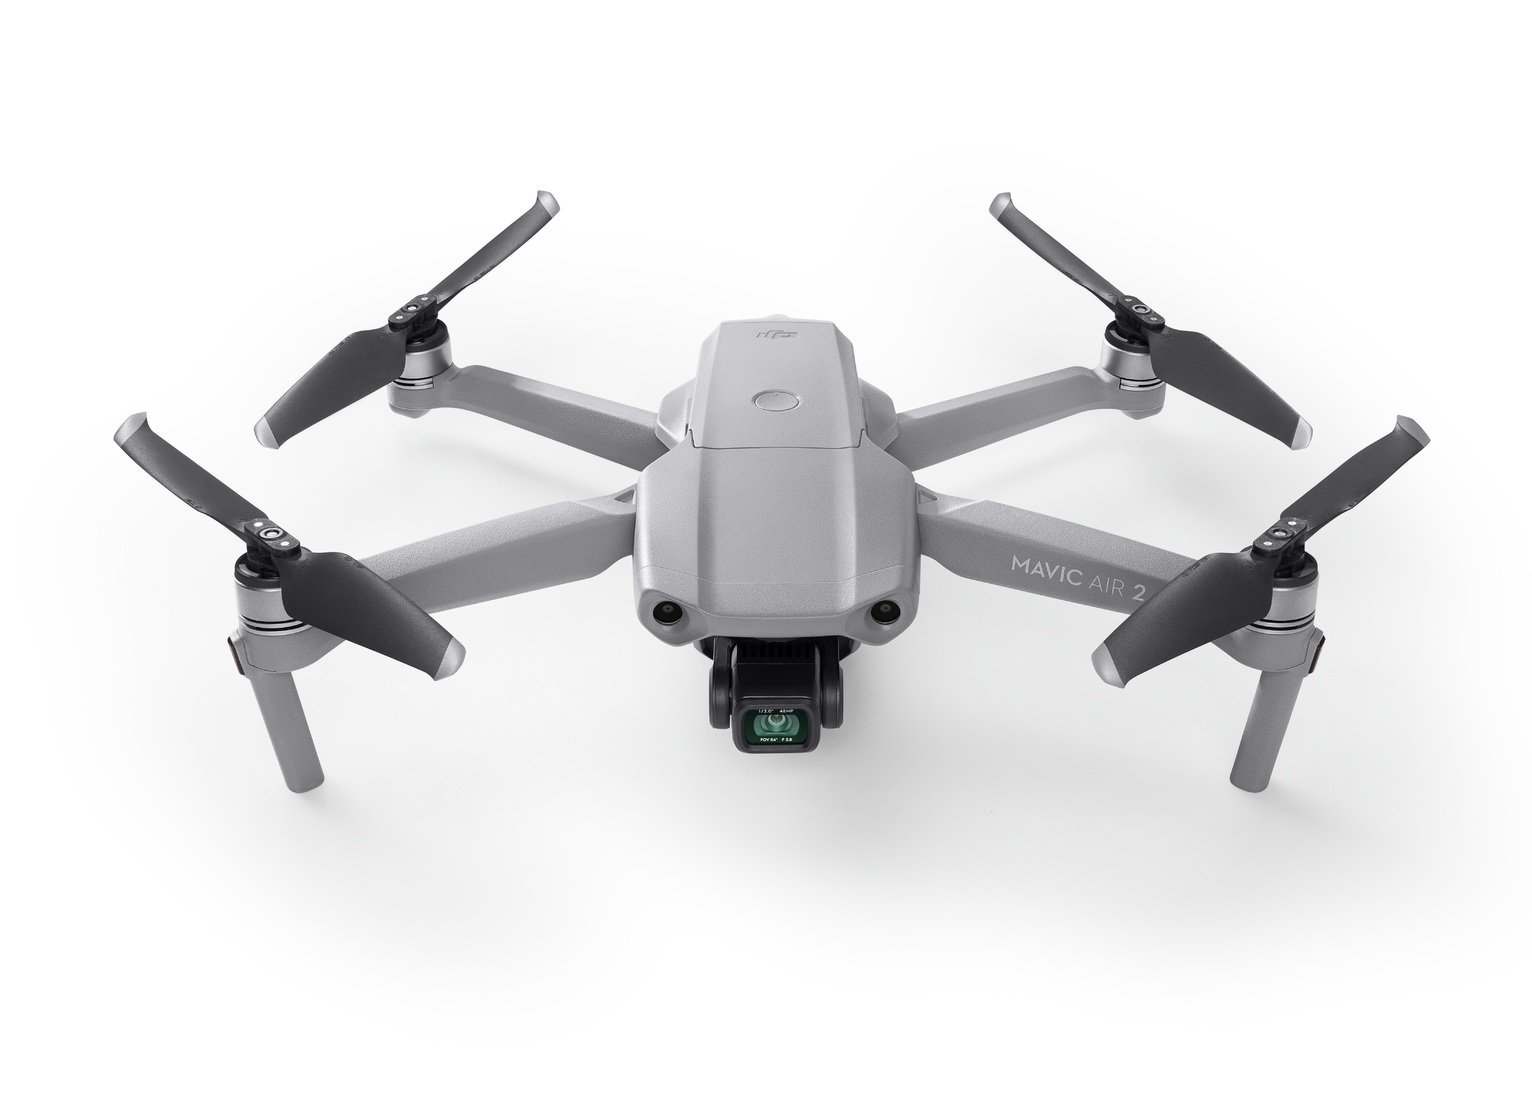 DJI Mavic Air 2 Drone Review